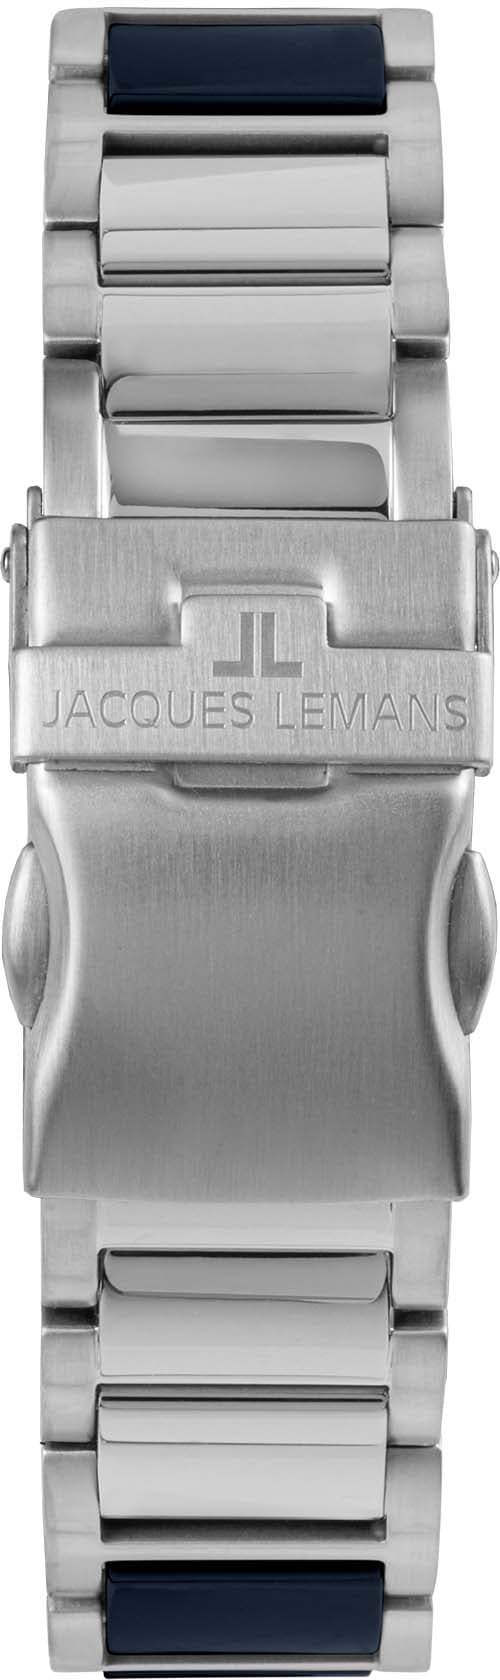 Jacques Lemans Keramikuhr »Liverpool, online 42-10B« bestellen bei OTTO